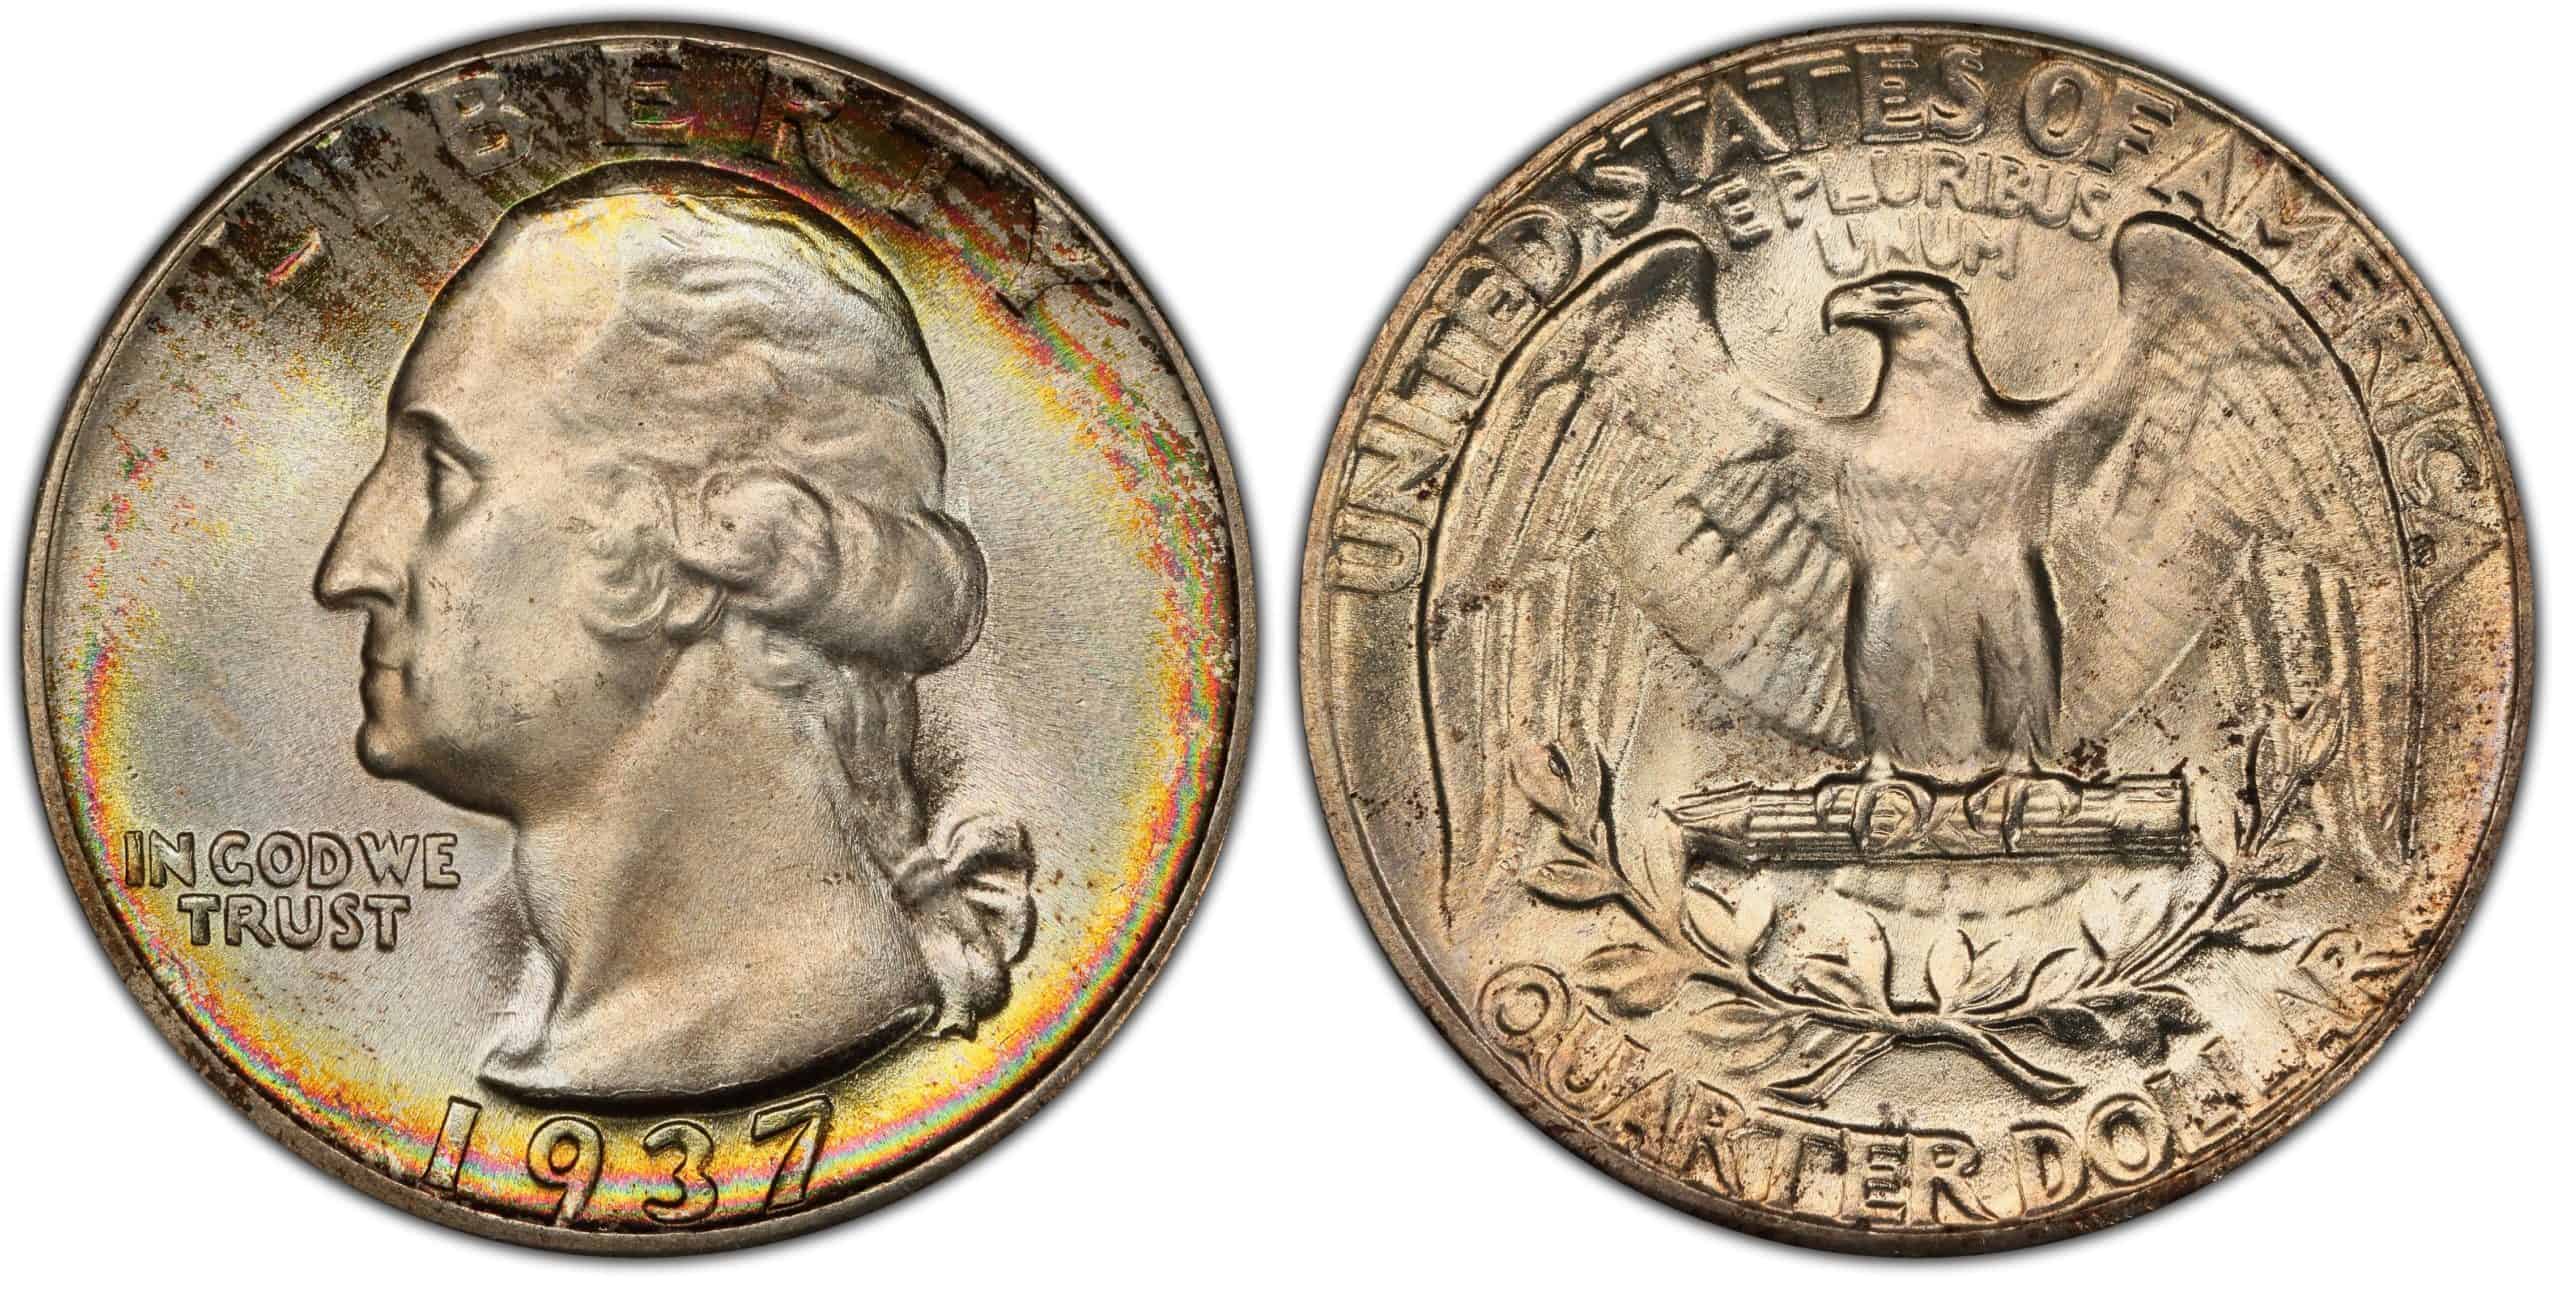 1937 Washington silver quarter